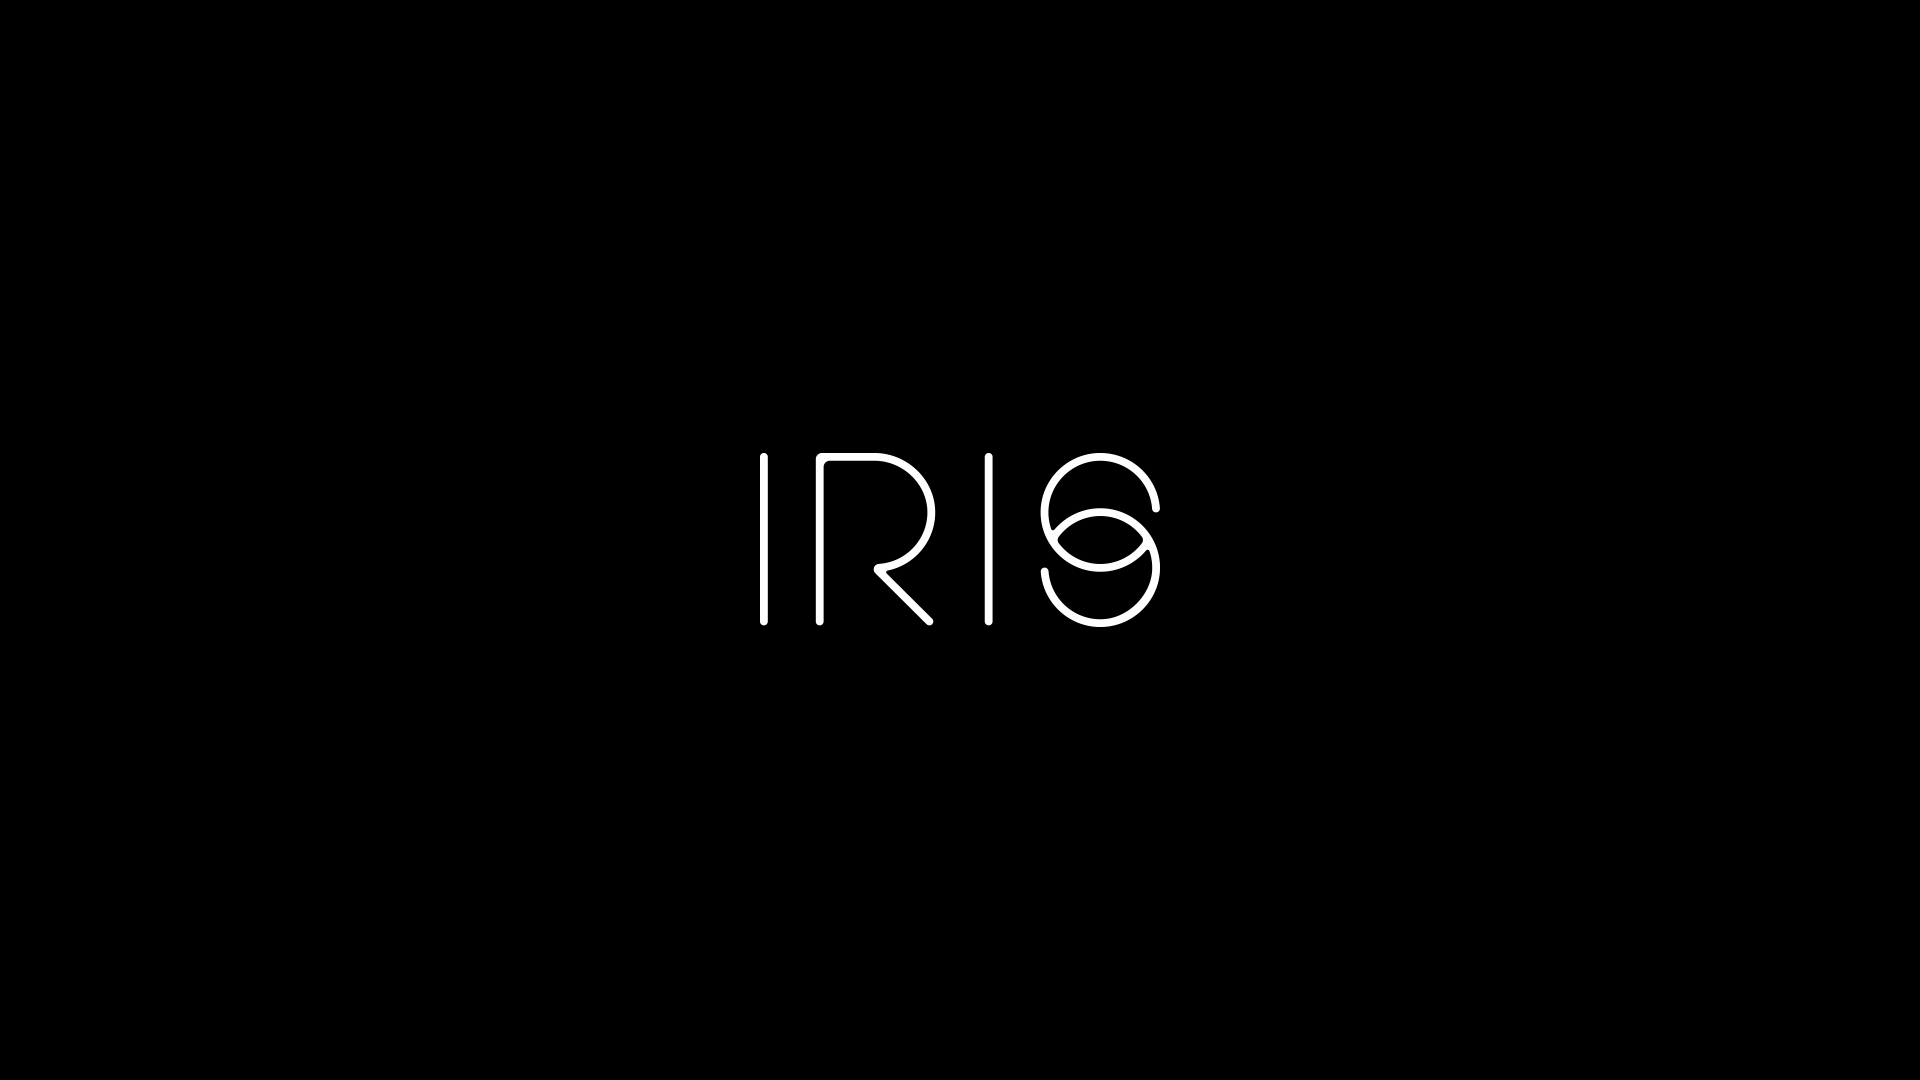 IRIS_Logo